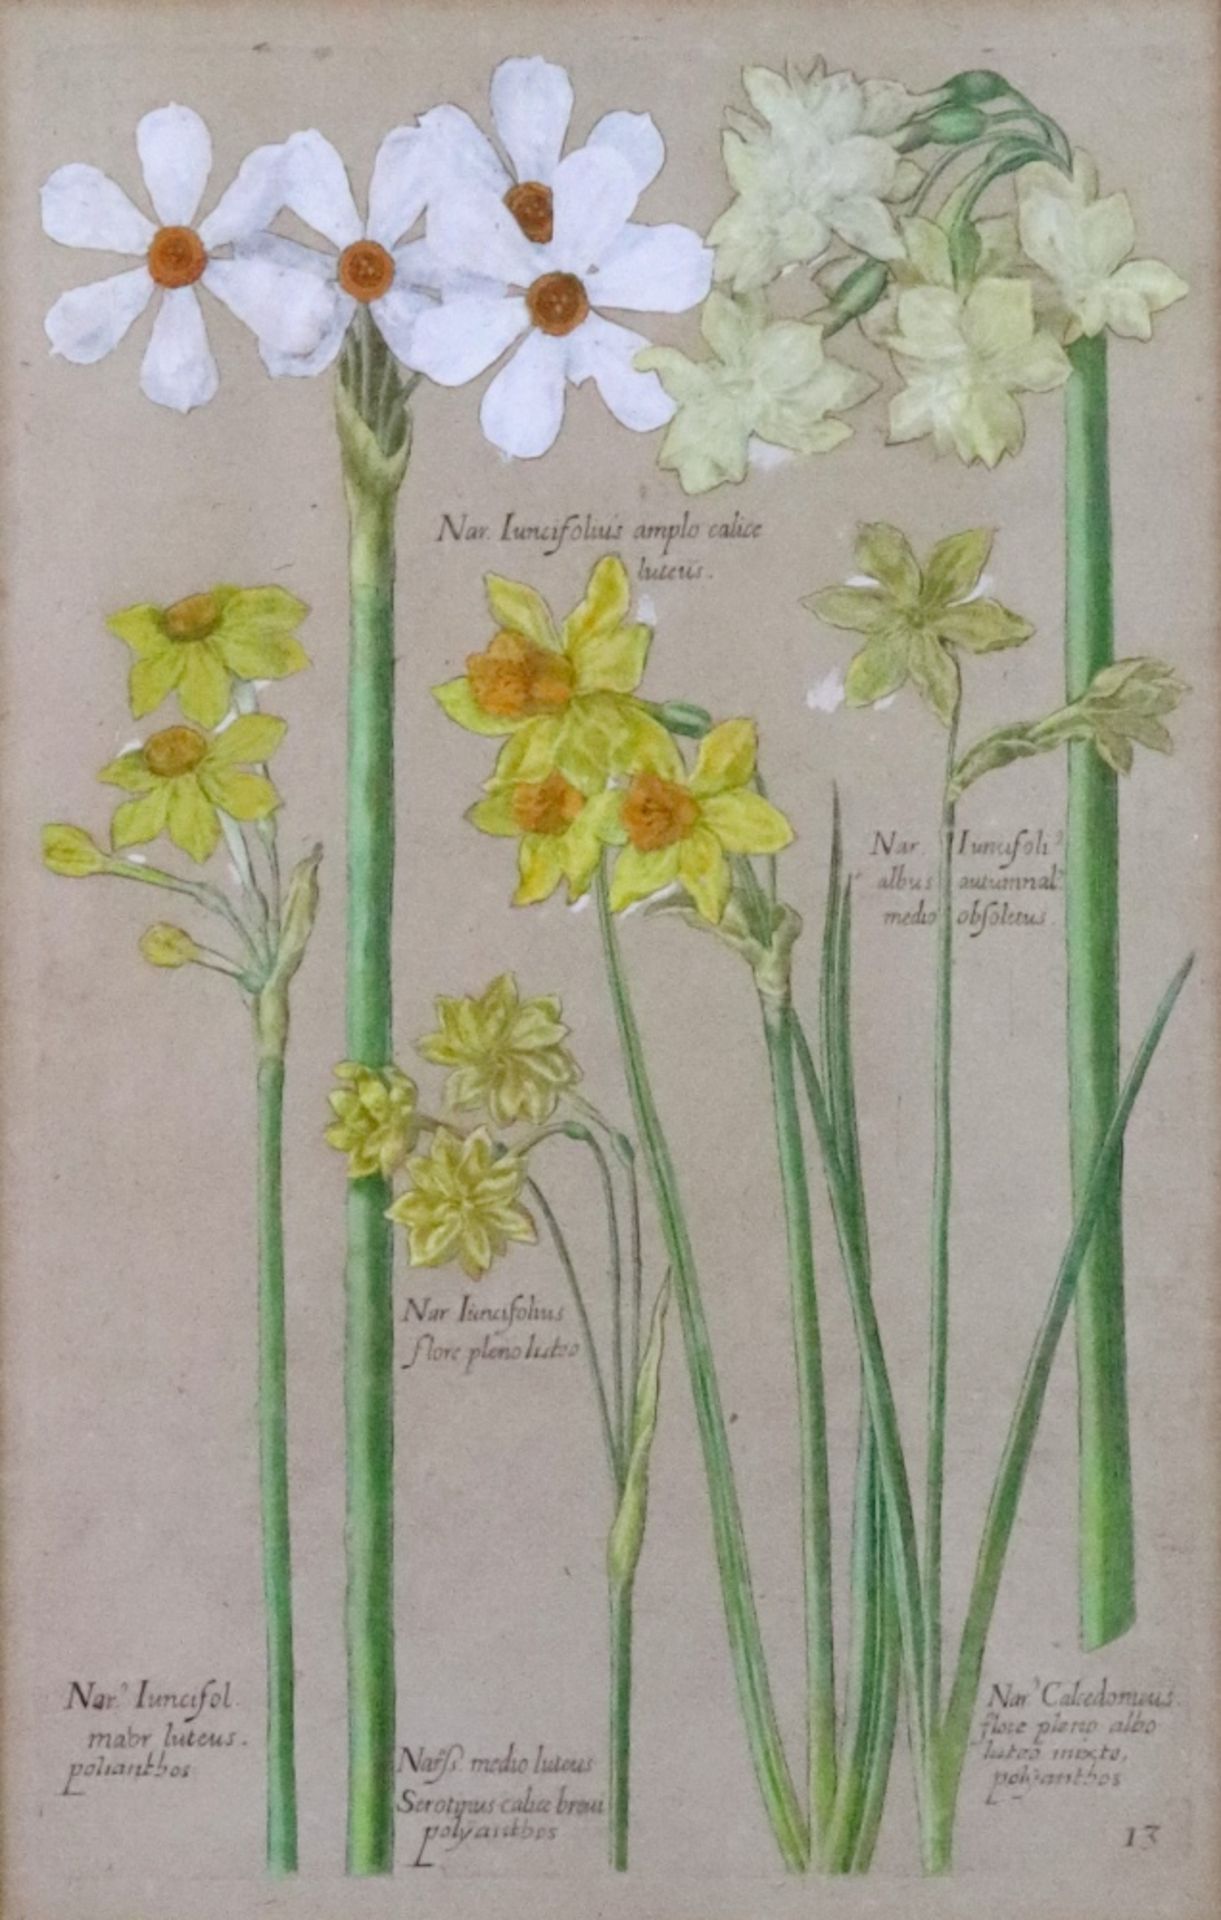 After Johann Theodor de Bry, A hand coloured engraving of flowers from his work Florilequim Novum,